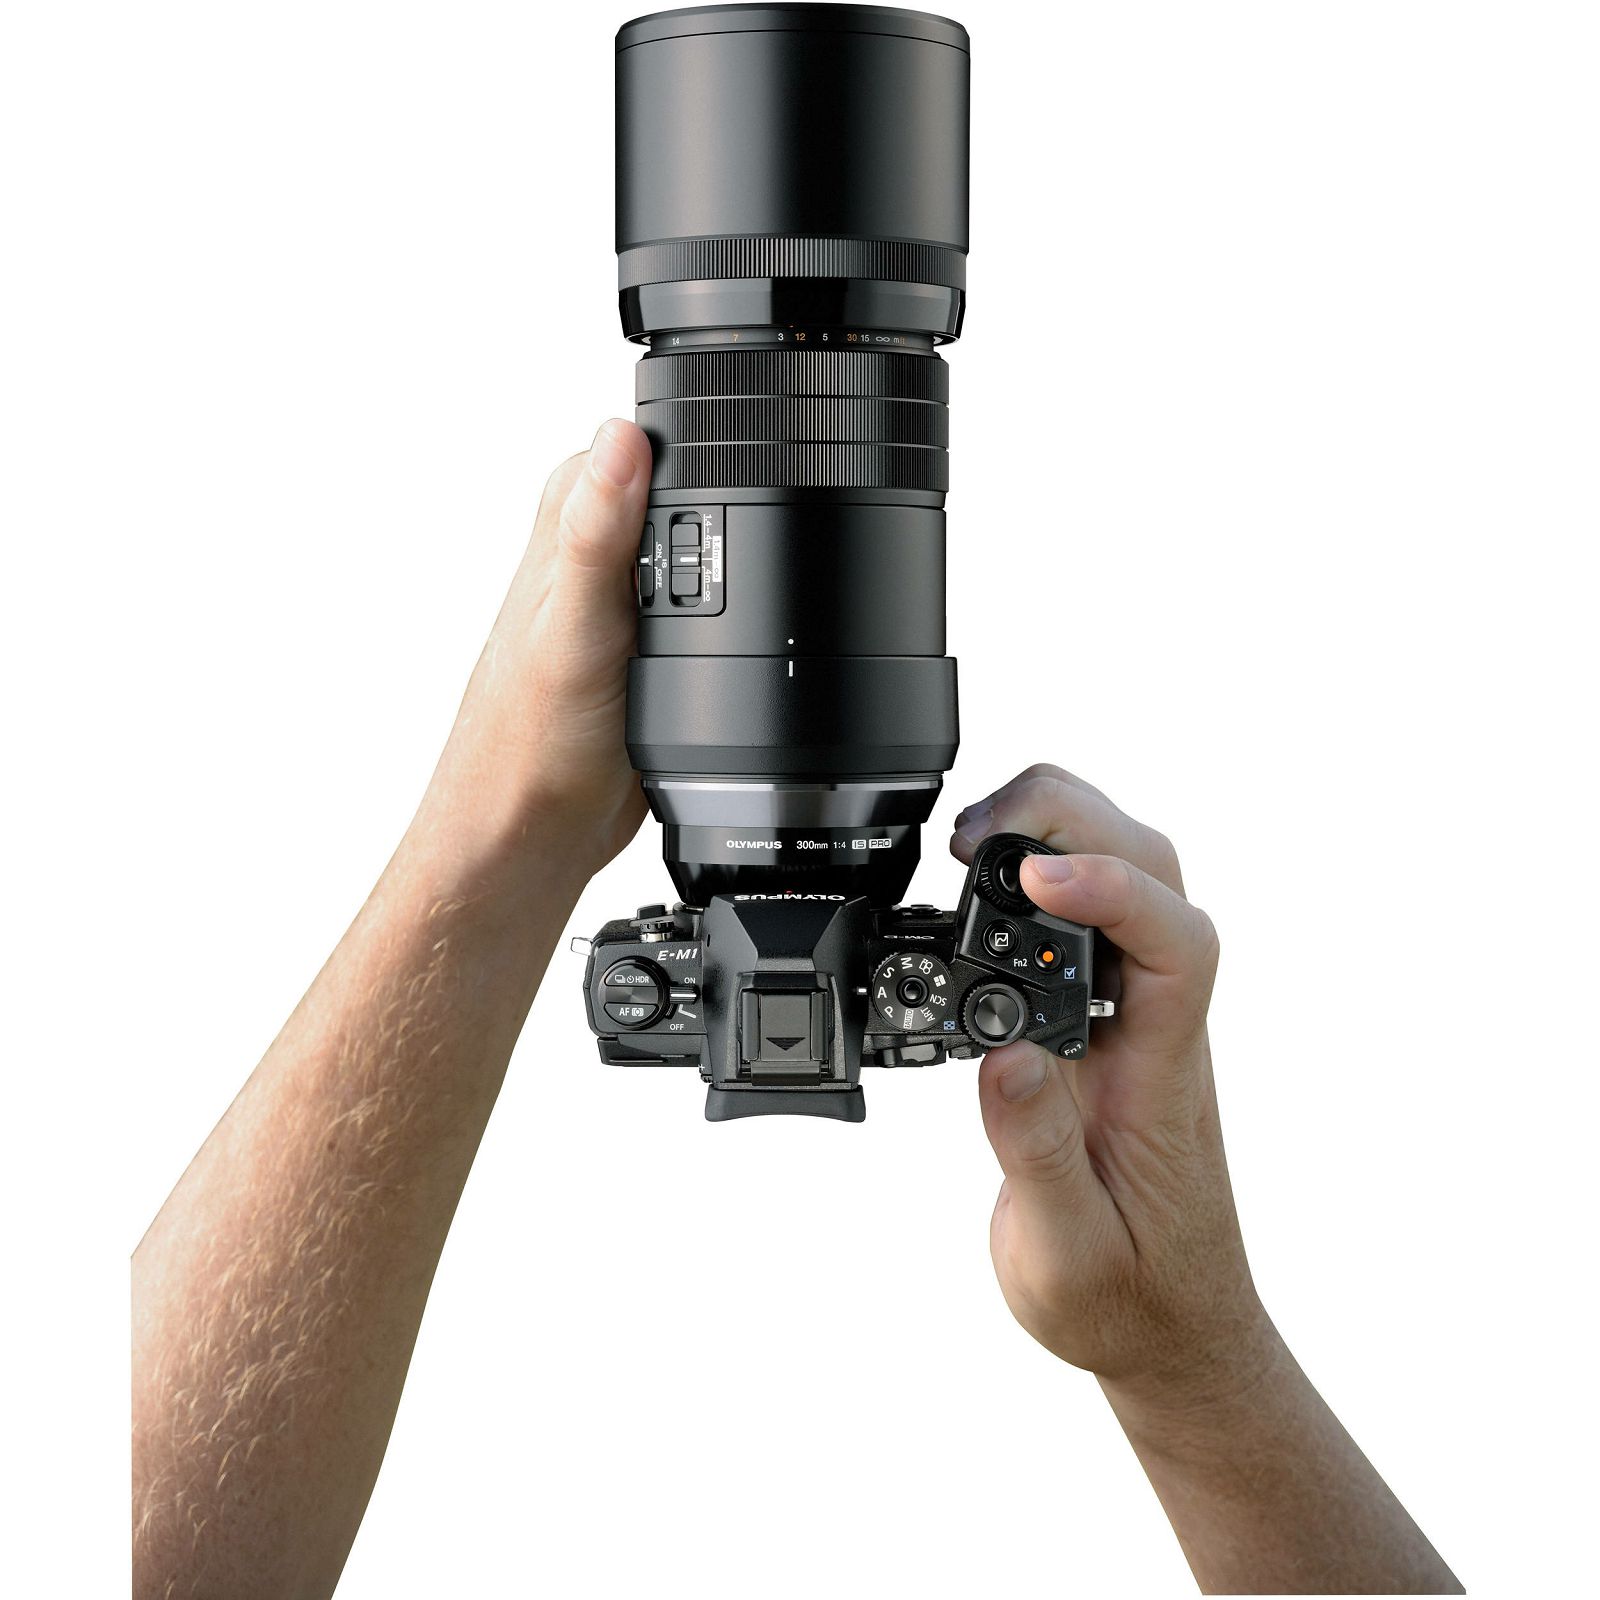 Olympus M. Zuiko Digital 300mm f/4 ED IS PRO telefoto objektiv fiksne žarišne duljine 300 1:4 F4 prime lens Micro Four Thirds MFT micro4/3" (V311070BW000)